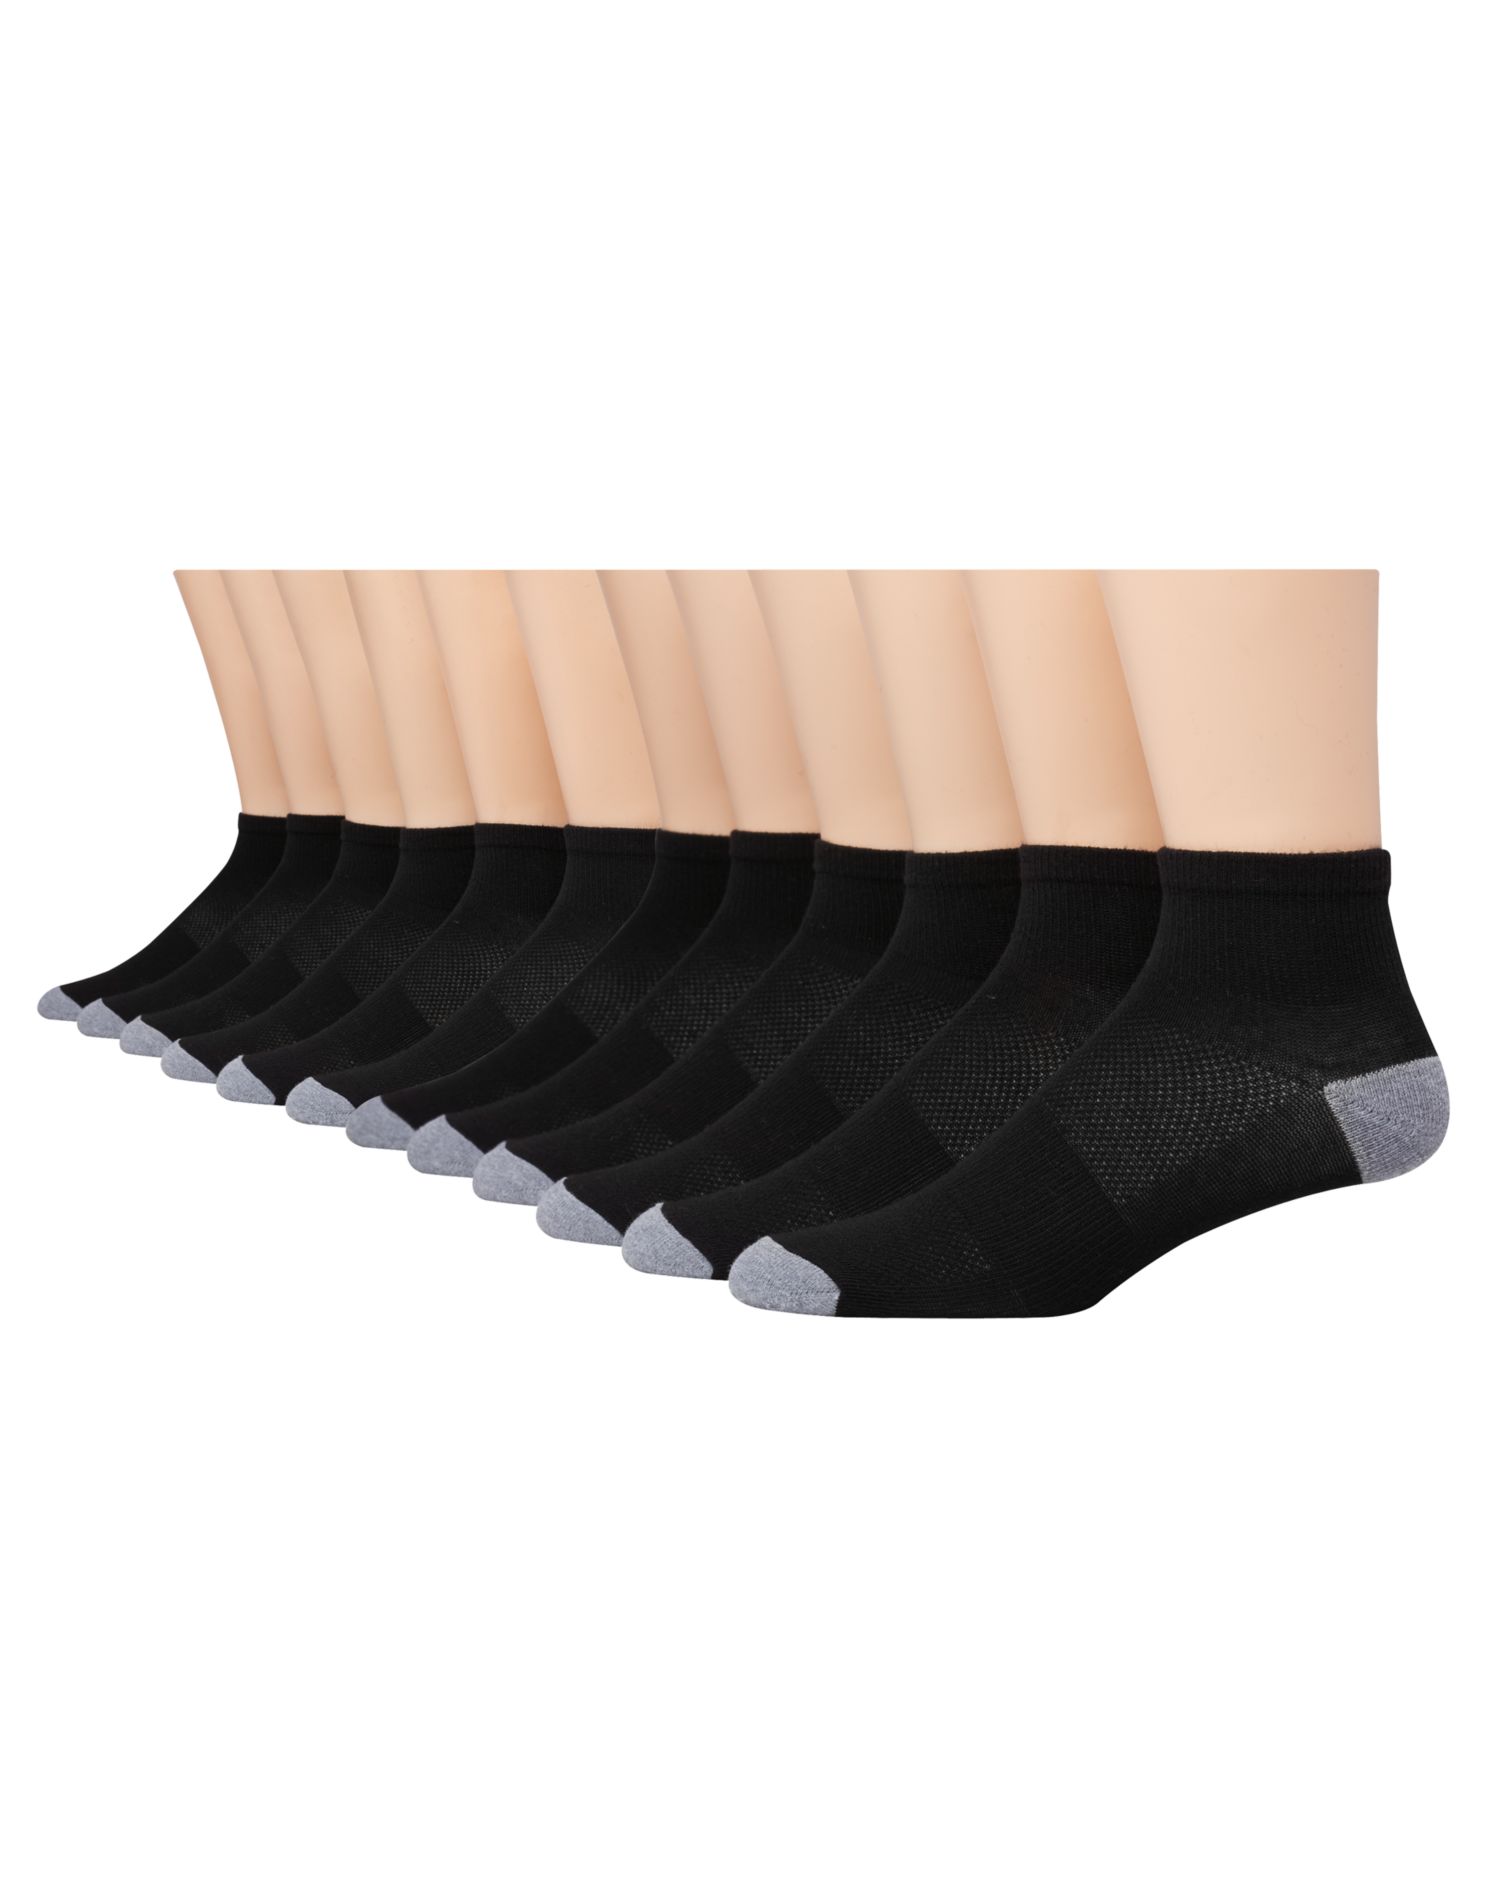 Hanes Mens FreshIQ X-Temp Ankle Socks 12-Pack - Apparel Direct Distributor